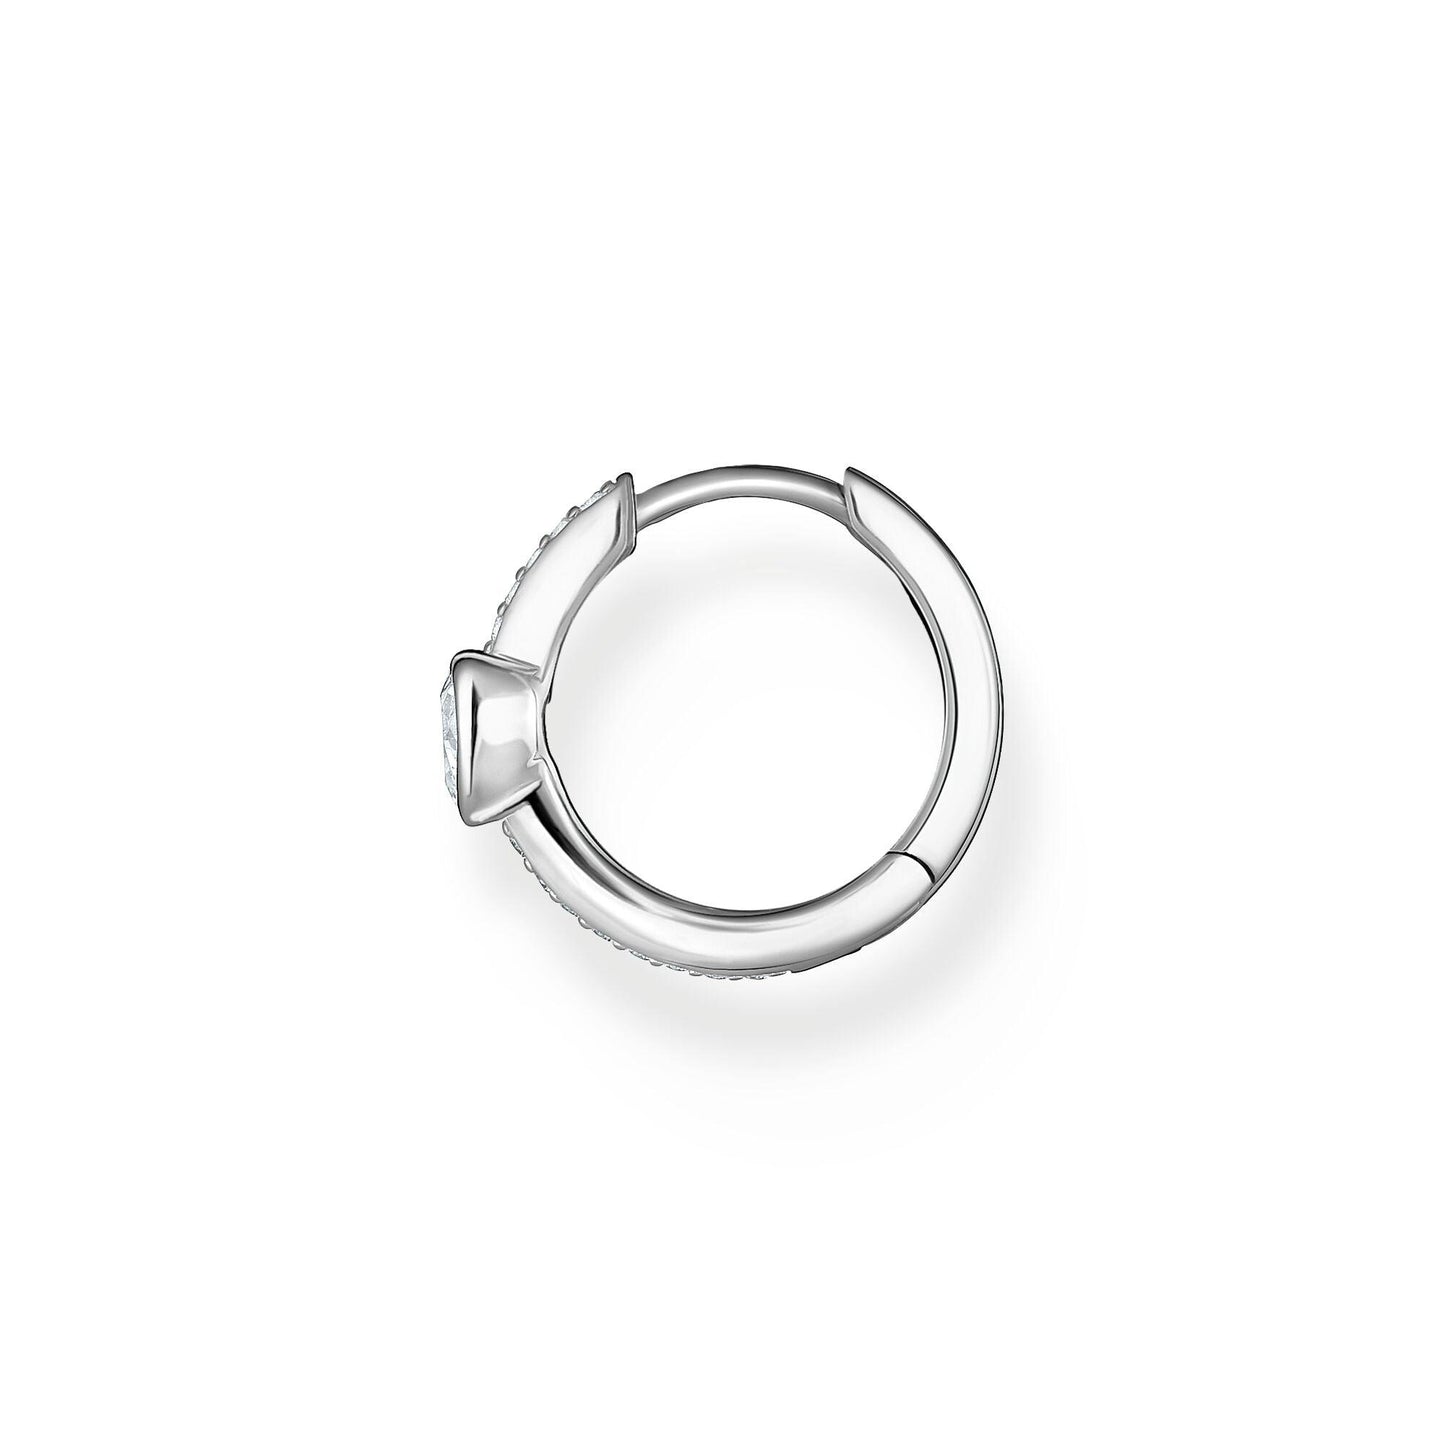 Thomas Sabo Sterling Silver Cubic Zirconia Heart Single Hoop Earring CR692-051-14 - Judith Hart Jewellers